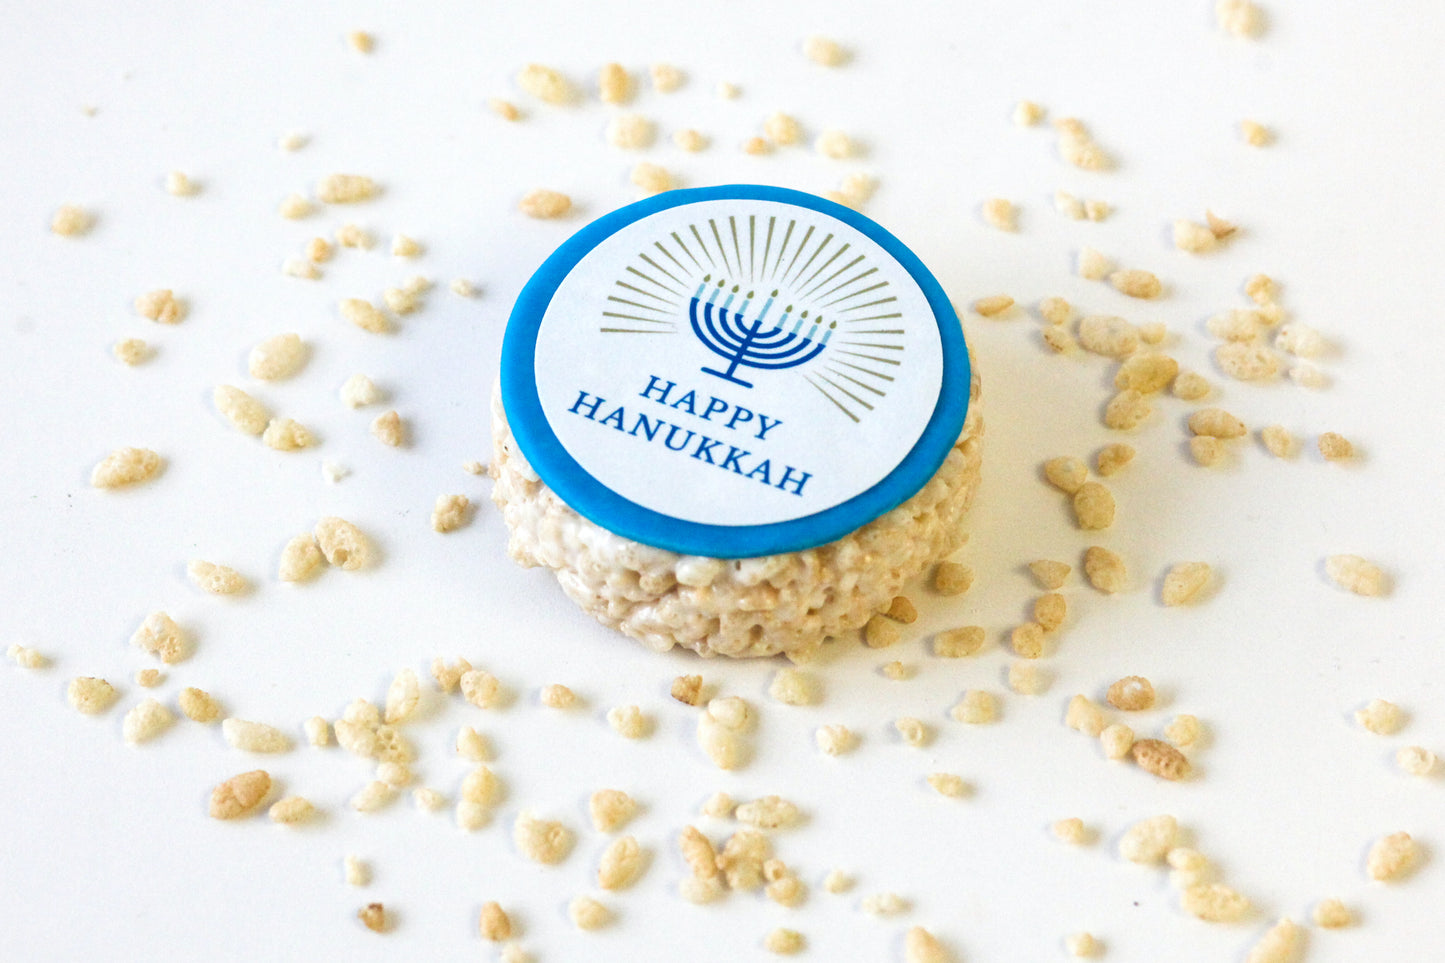 Hanukkah Message Rice Crispie Treats